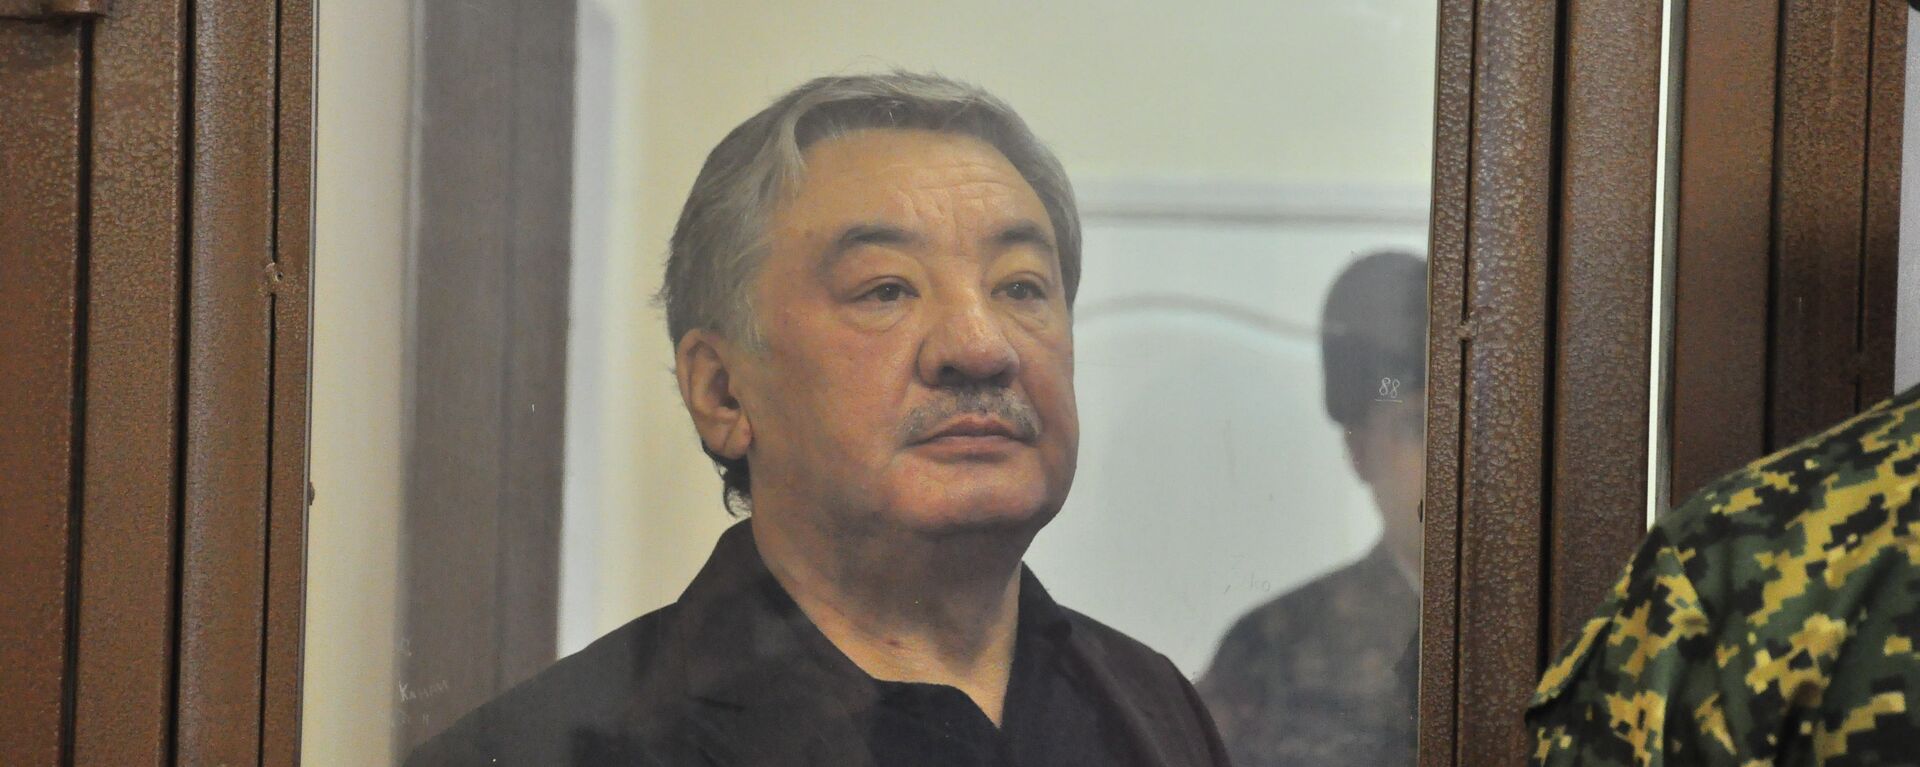 Архивное фото Нурлана Джуламанова в зале суда - Sputnik Казахстан, 1920, 05.05.2017